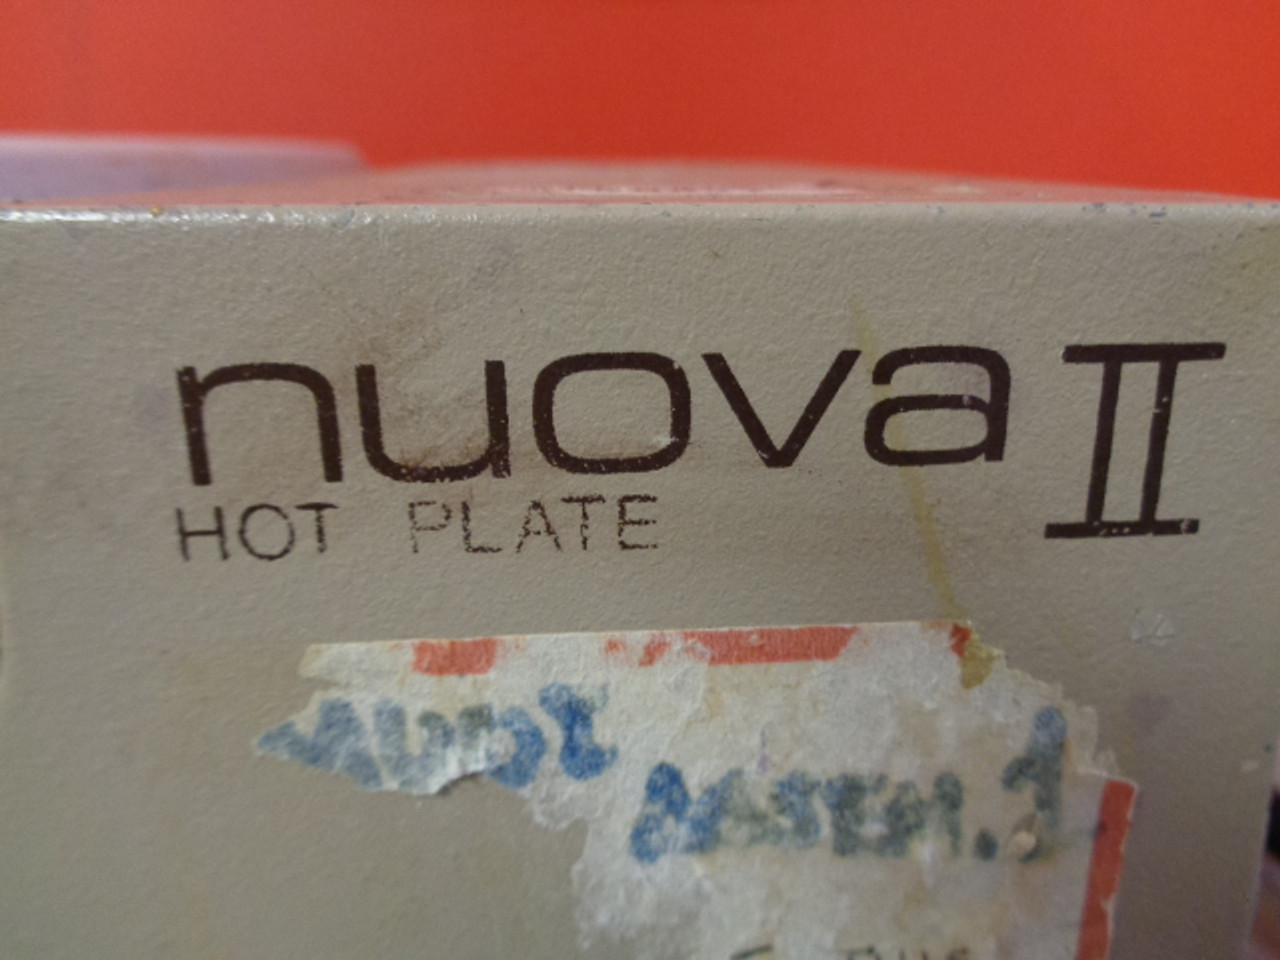 Thermolyne HP18325 Nuova II White Ceramic 7"x7" Hot Plate